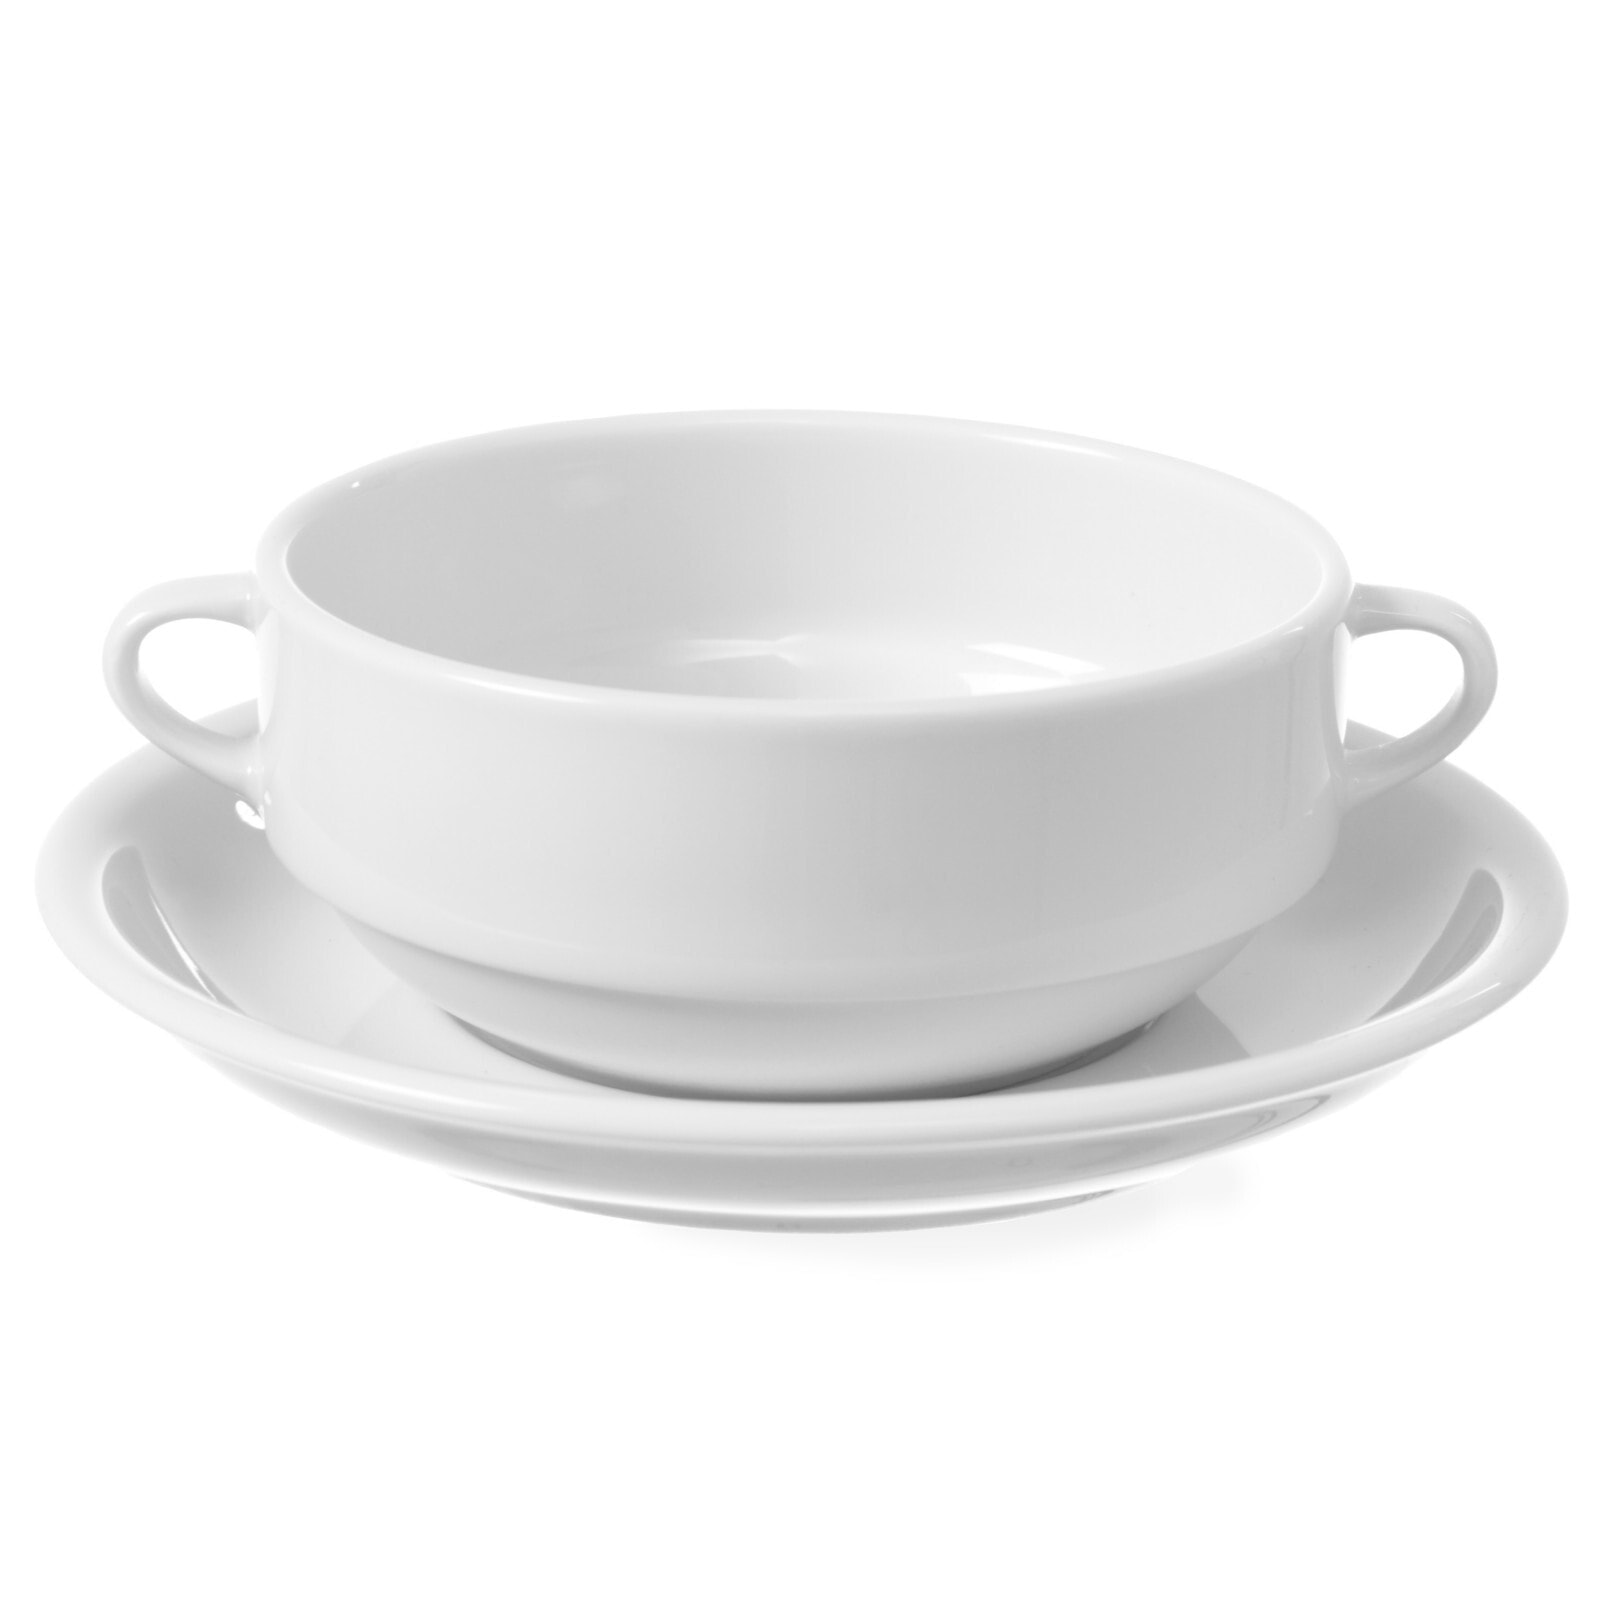 White porcelain soup OPTIMA 380ml set of 12 - Hendi 770924